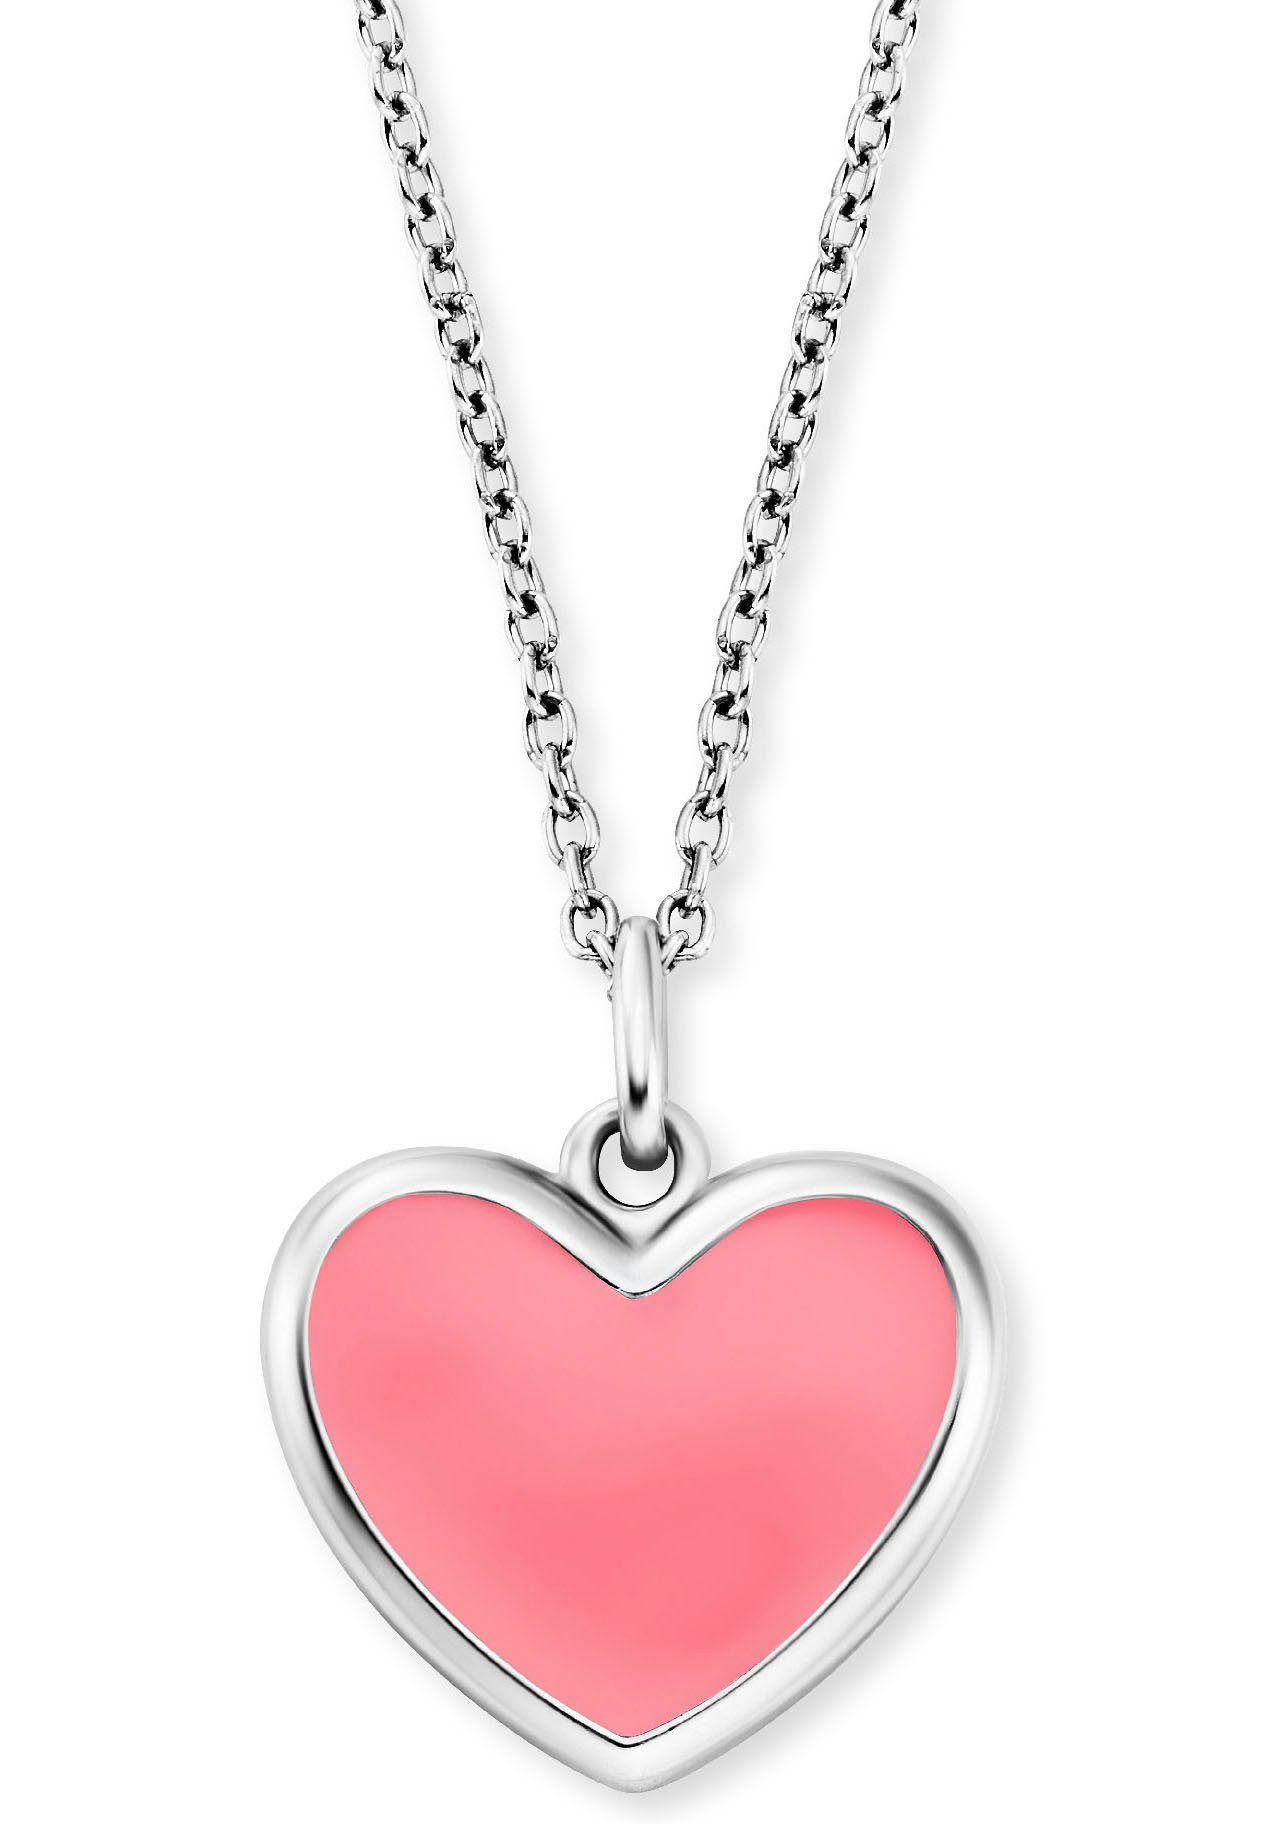 Herz, Schmuck Symbol HEN-HEART-13, Kette und Herz symbolisiert Anhänger Little HEN-HEART-06, mit Herzengel süßer Zuneigung Heart, Dieses als Geschenk, Blickfang Liebe